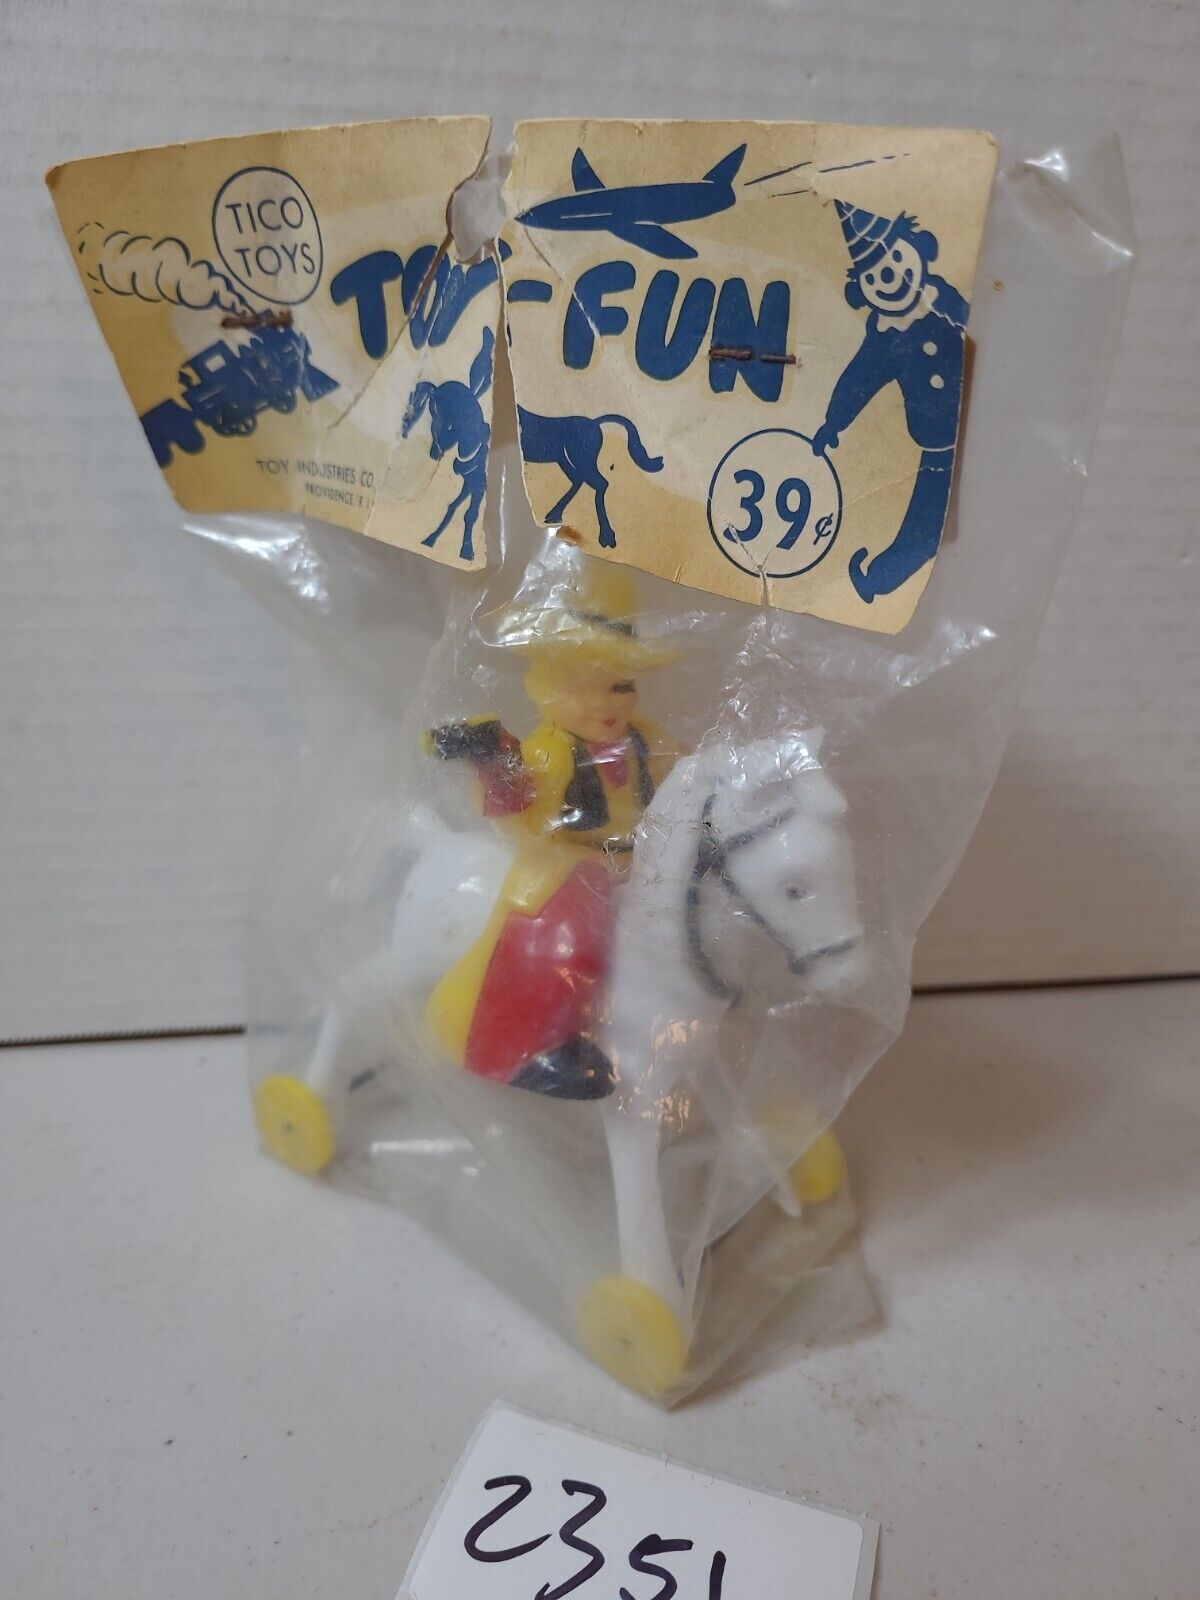 Rare Tico Toys Toy Fun Vintage Cowboy Horse Riding In Package Rosbro Rosen 23b51